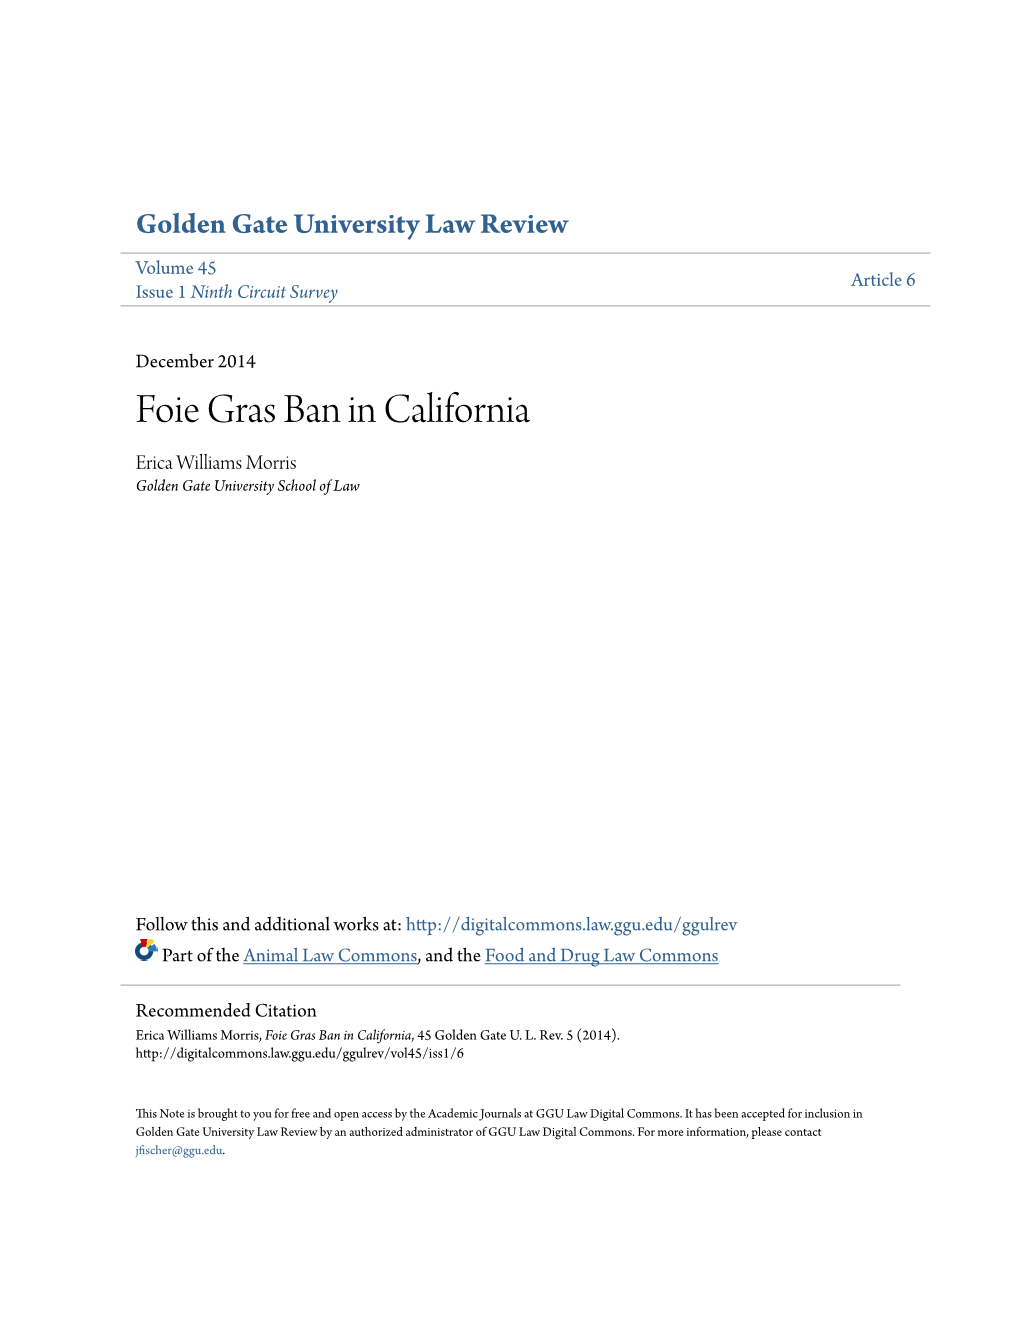 Foie Gras Ban in California Erica Williams Morris Golden Gate University School of Law